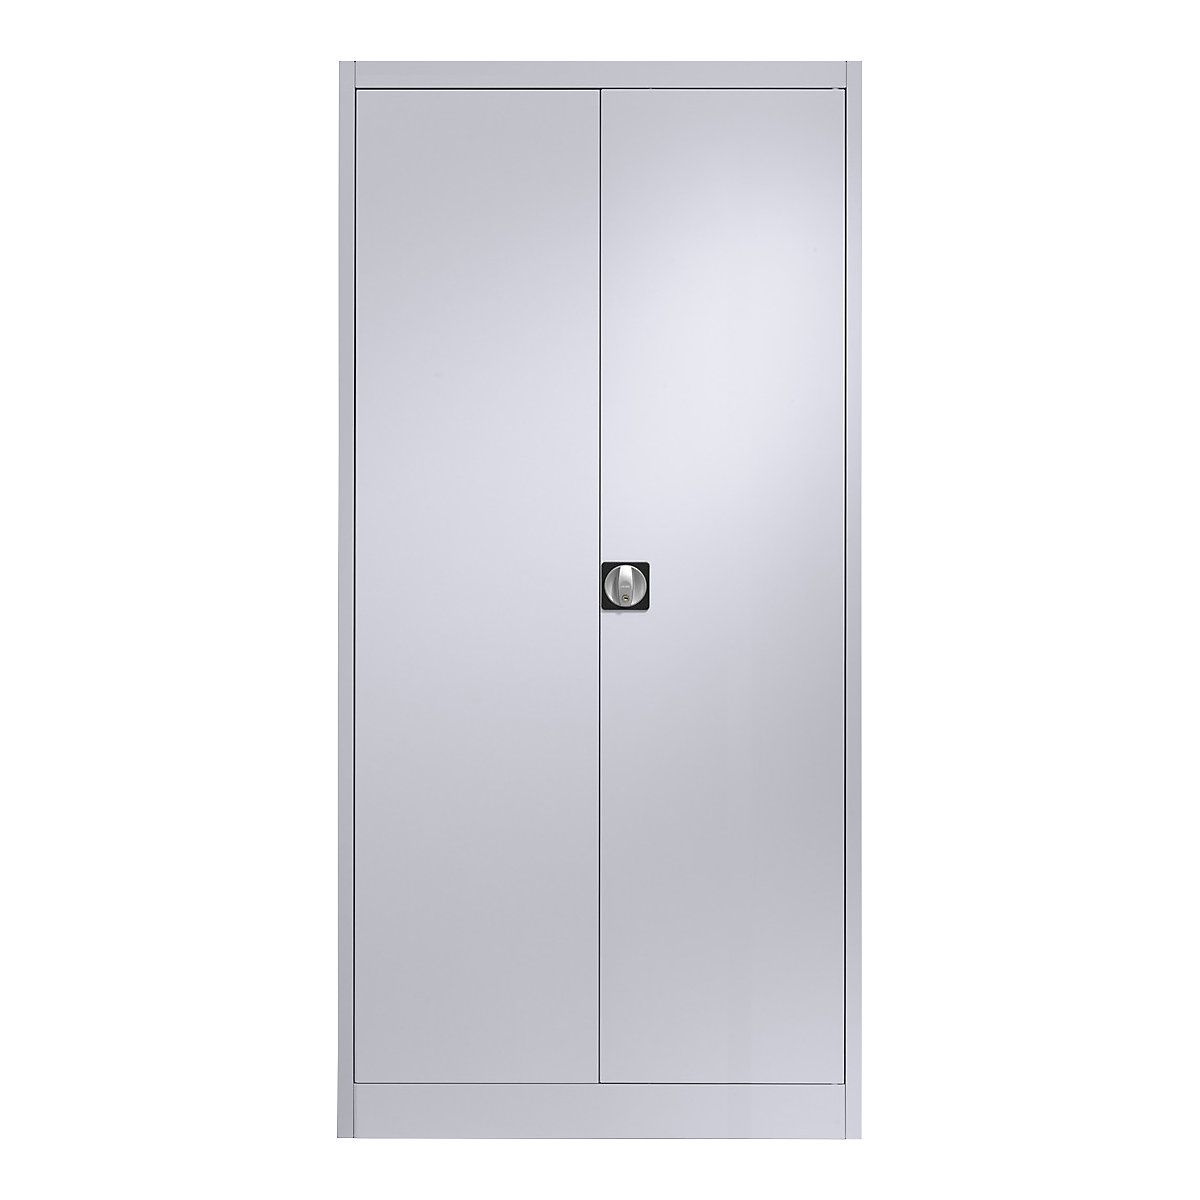 Steel cabinet with double doors – mauser